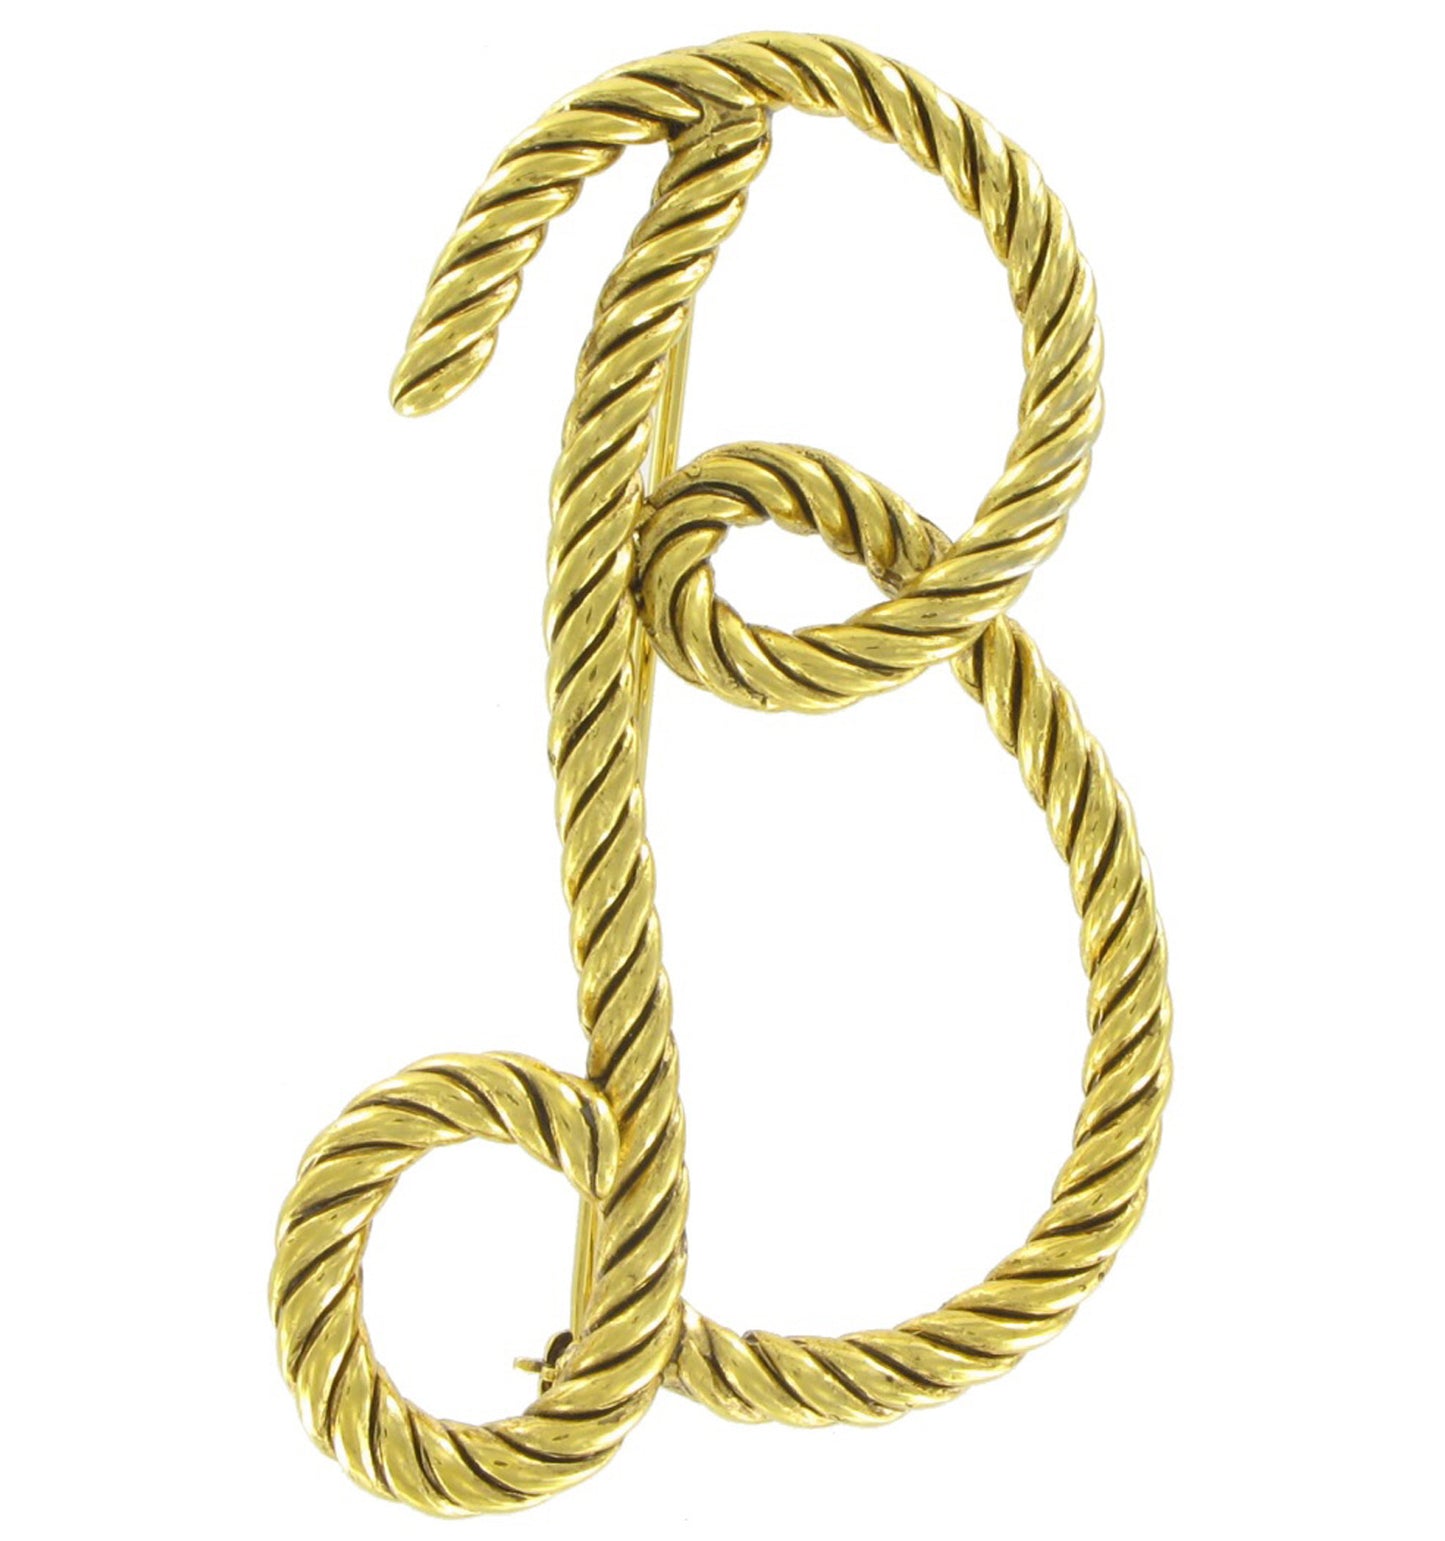 Large Script Gold Tone Rope Initial "B" Pin Brooch 2 1/2"